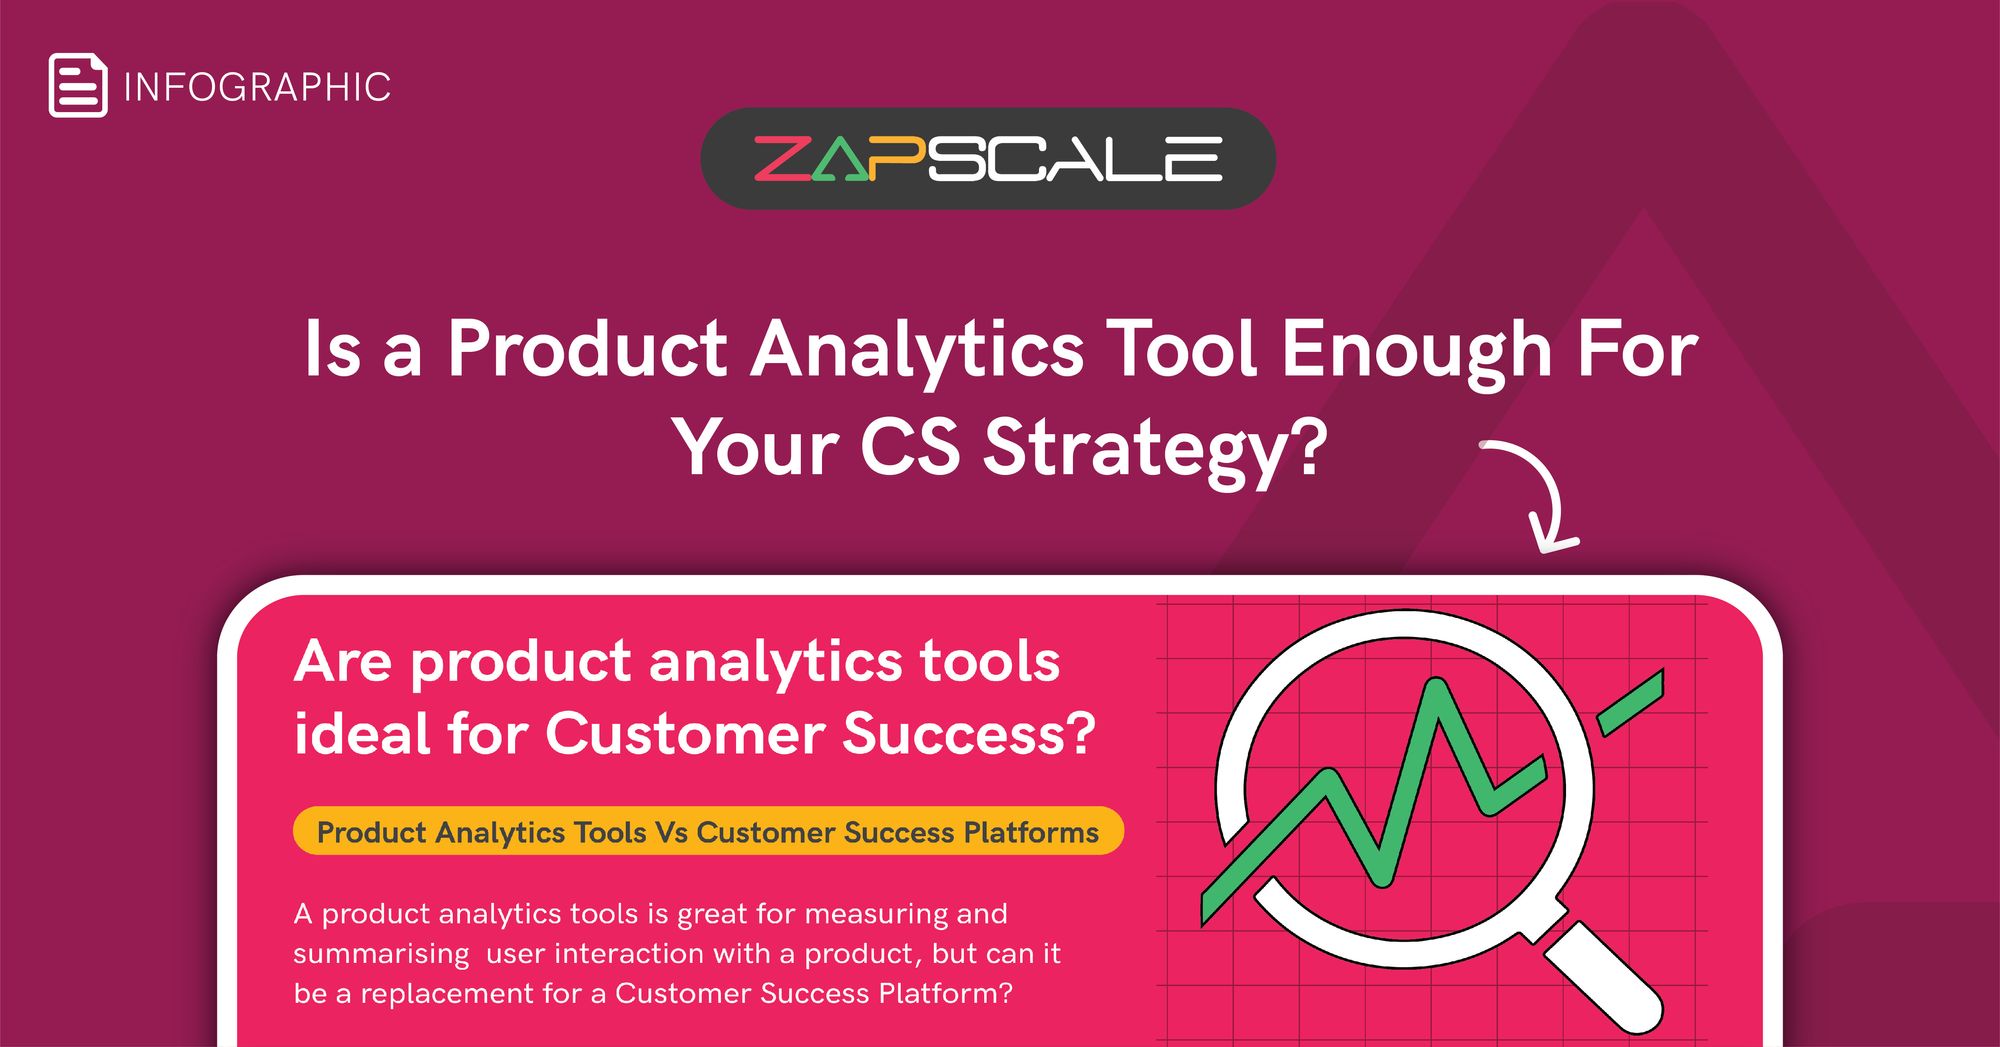 Product Analytics Tools vs Customer Success Platforms